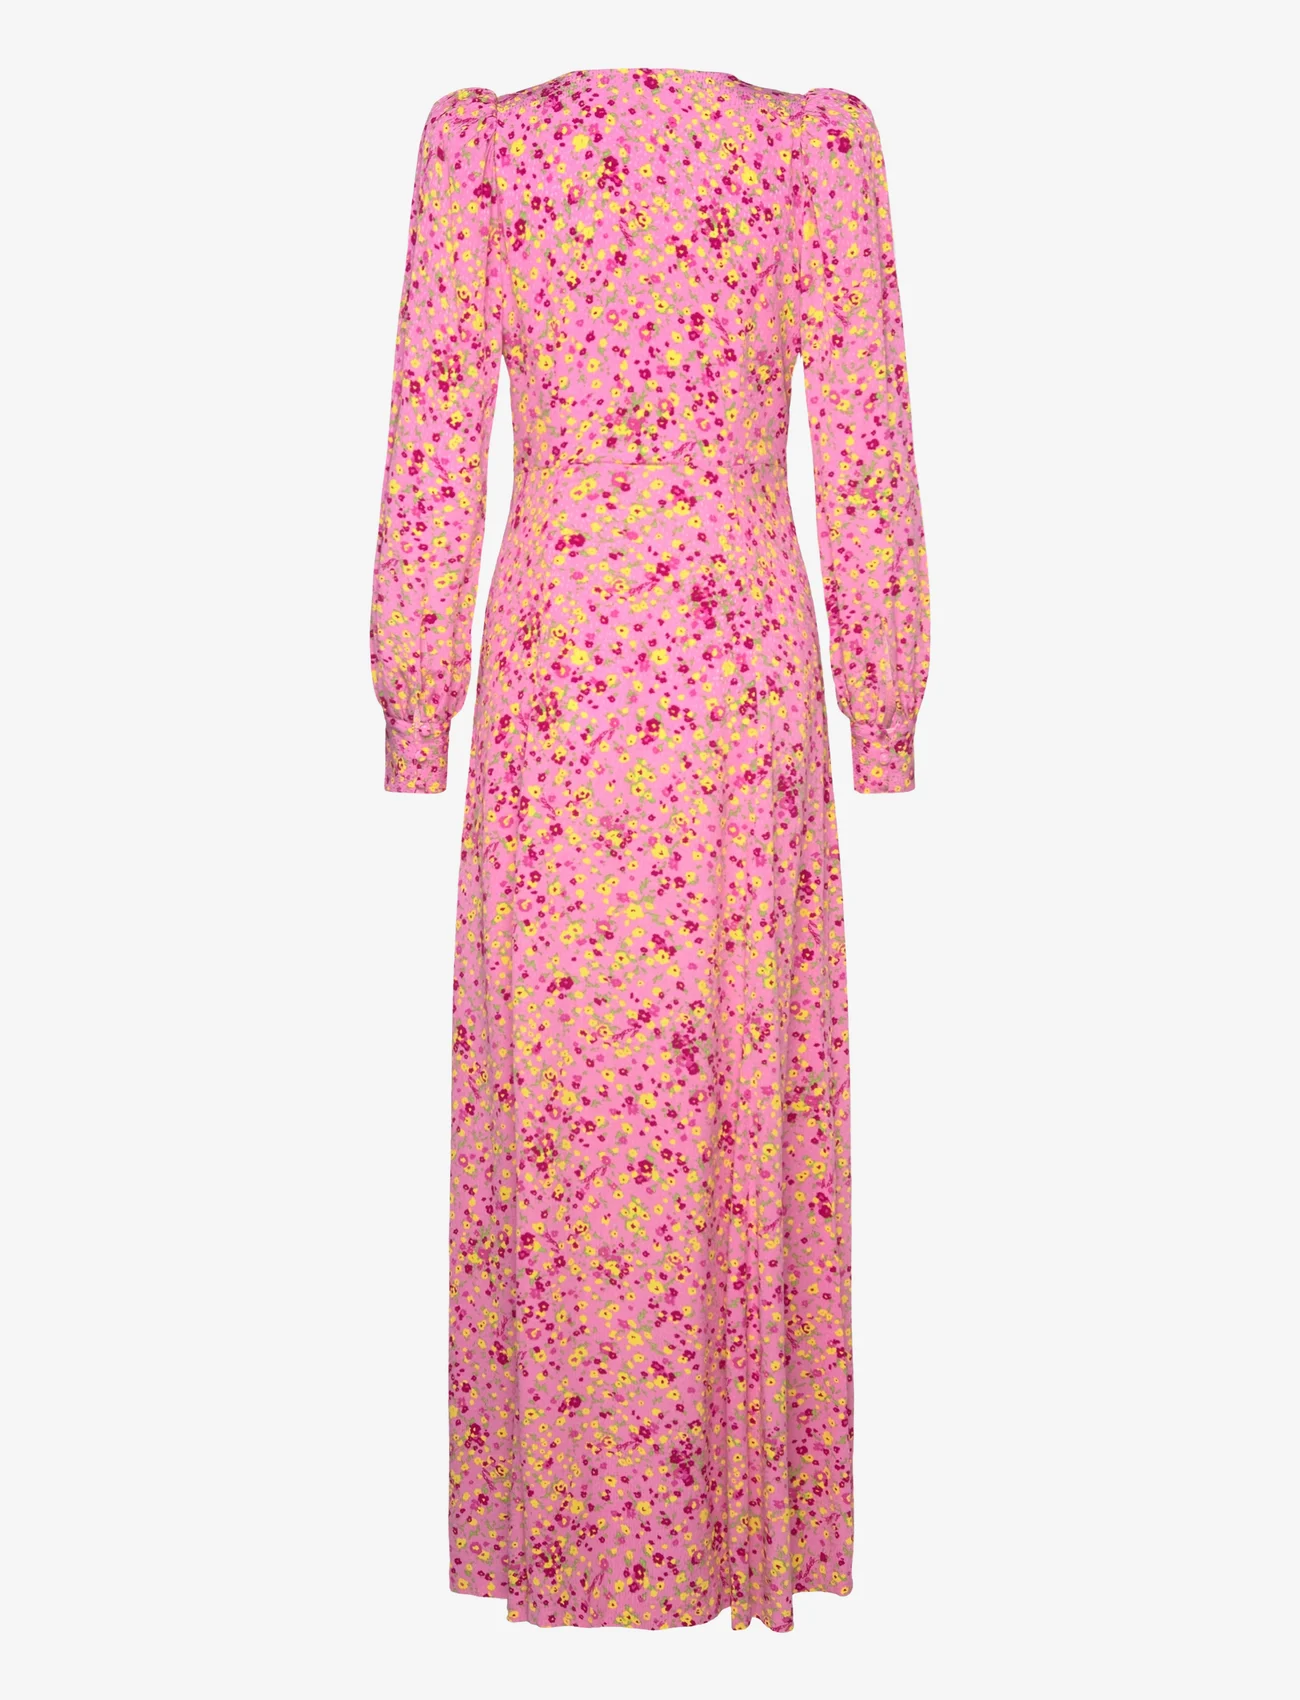 ROTATE Birger Christensen - Jacquard Maxi Dress - maxi dresses - fuchsia pink comb. - 1